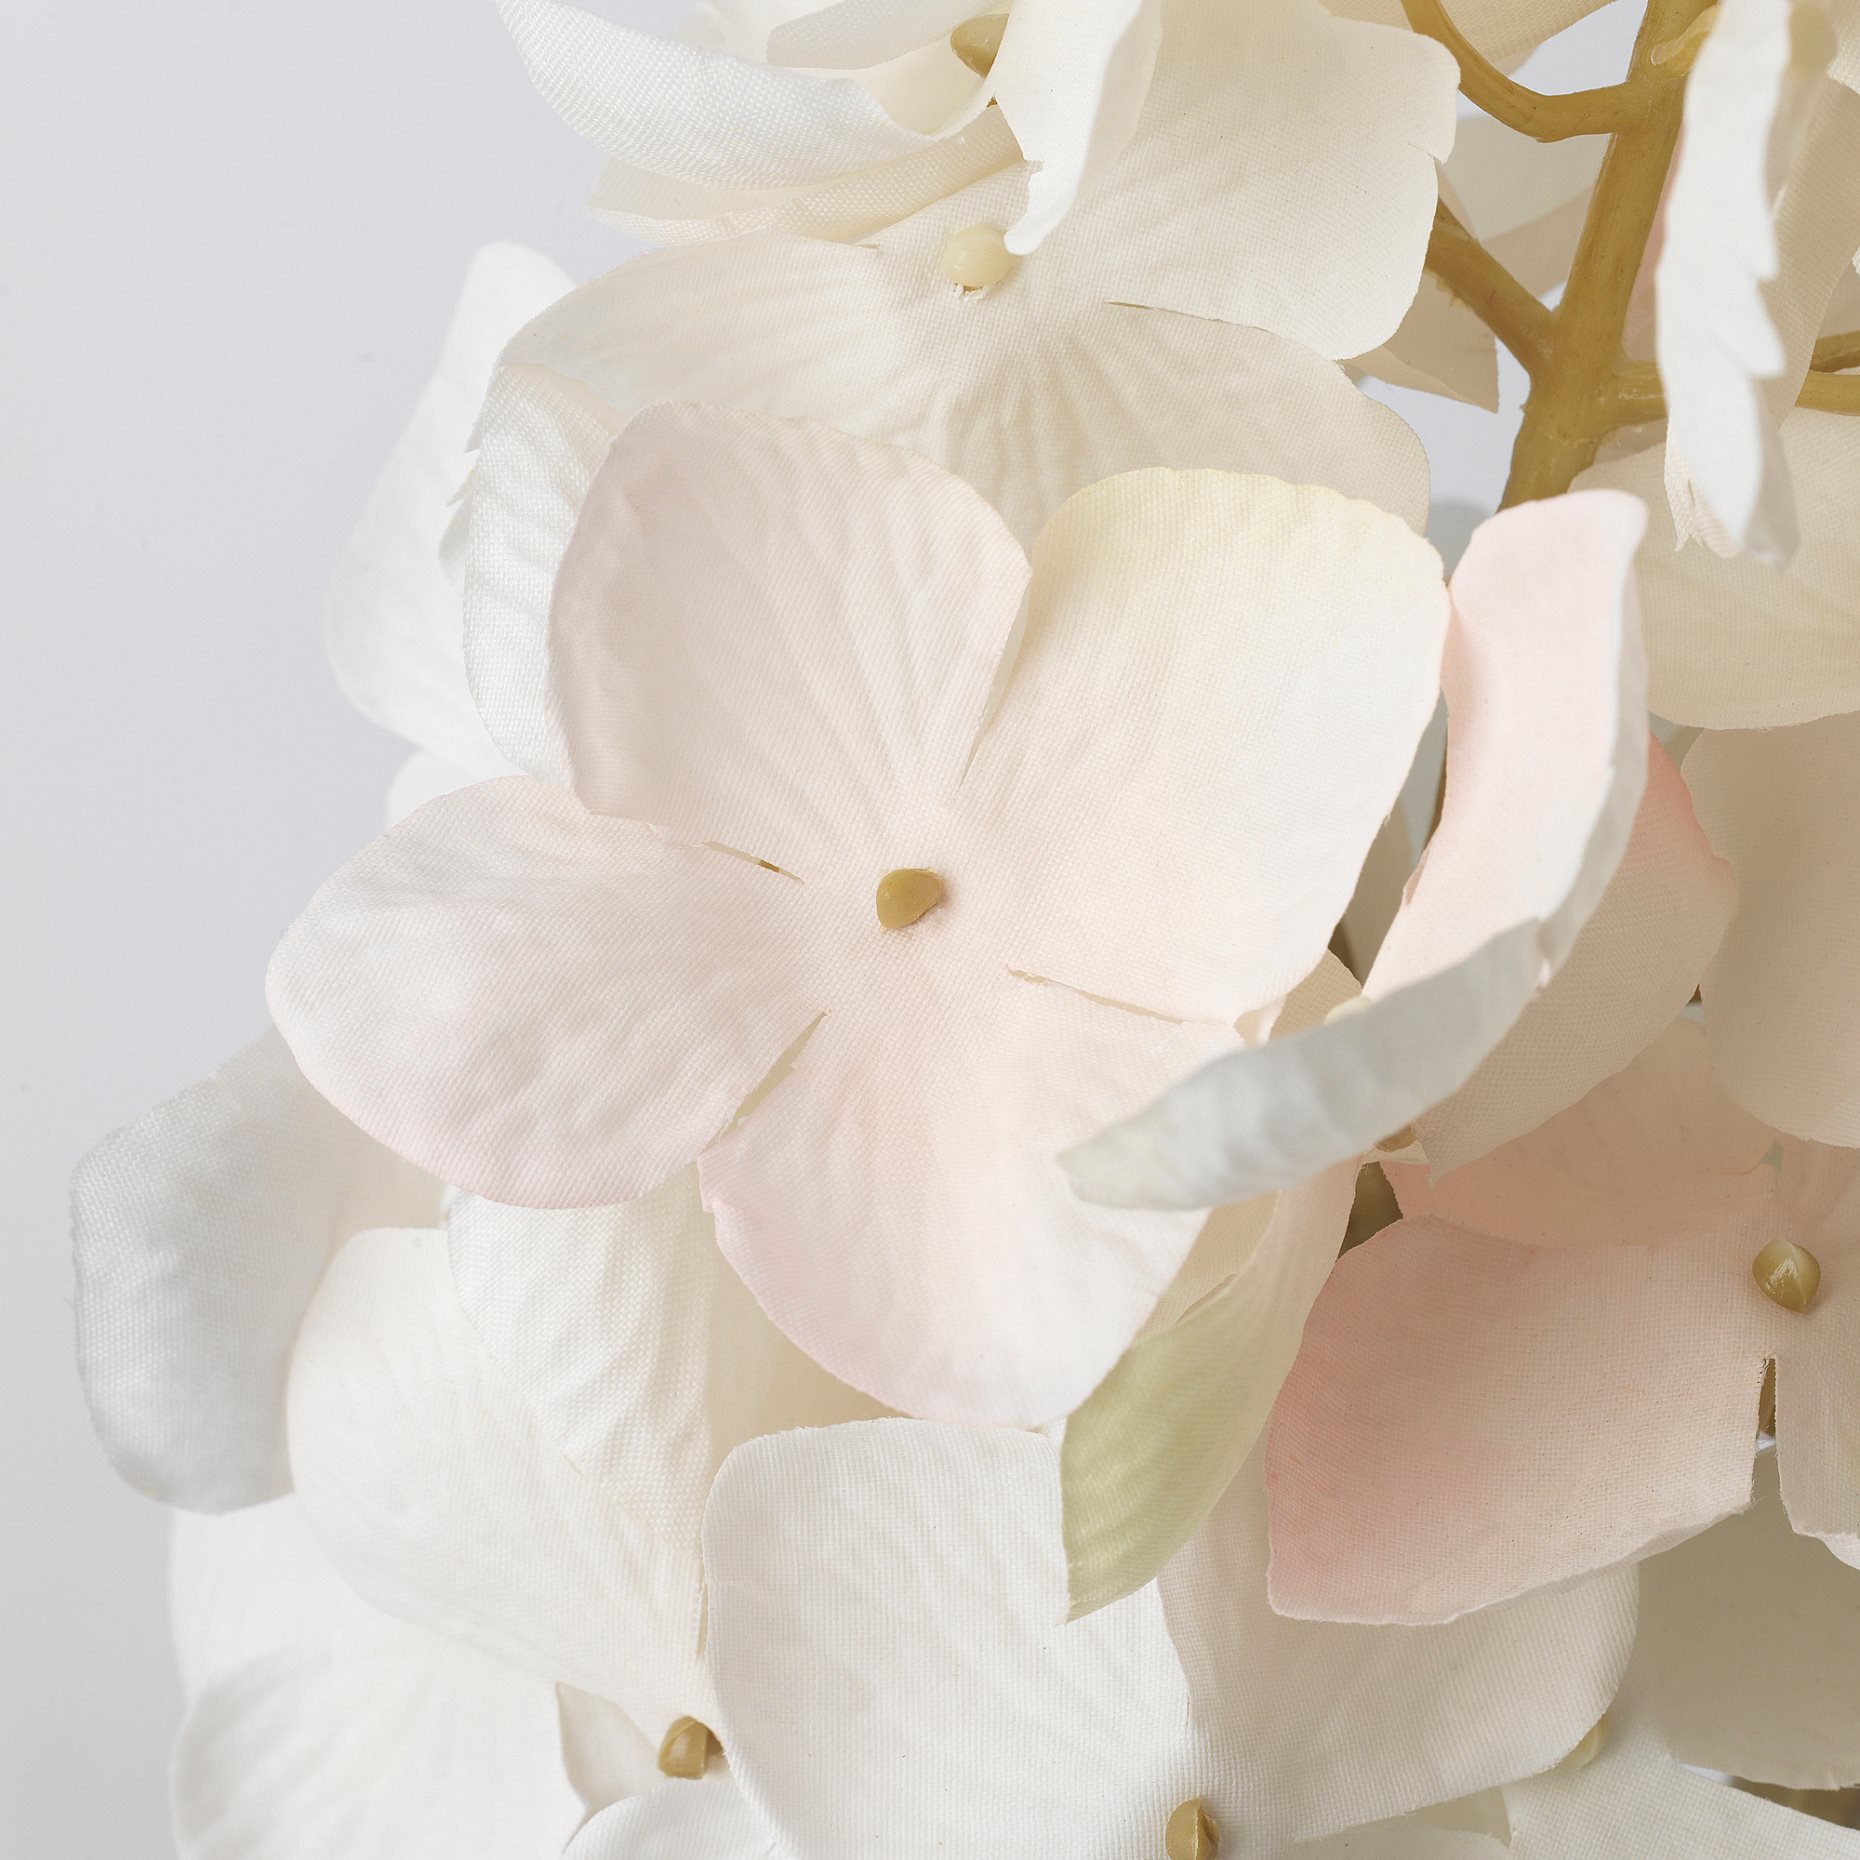 SMYCKA, artificial flower/Hydrangea, 65 cm, 405.601.17